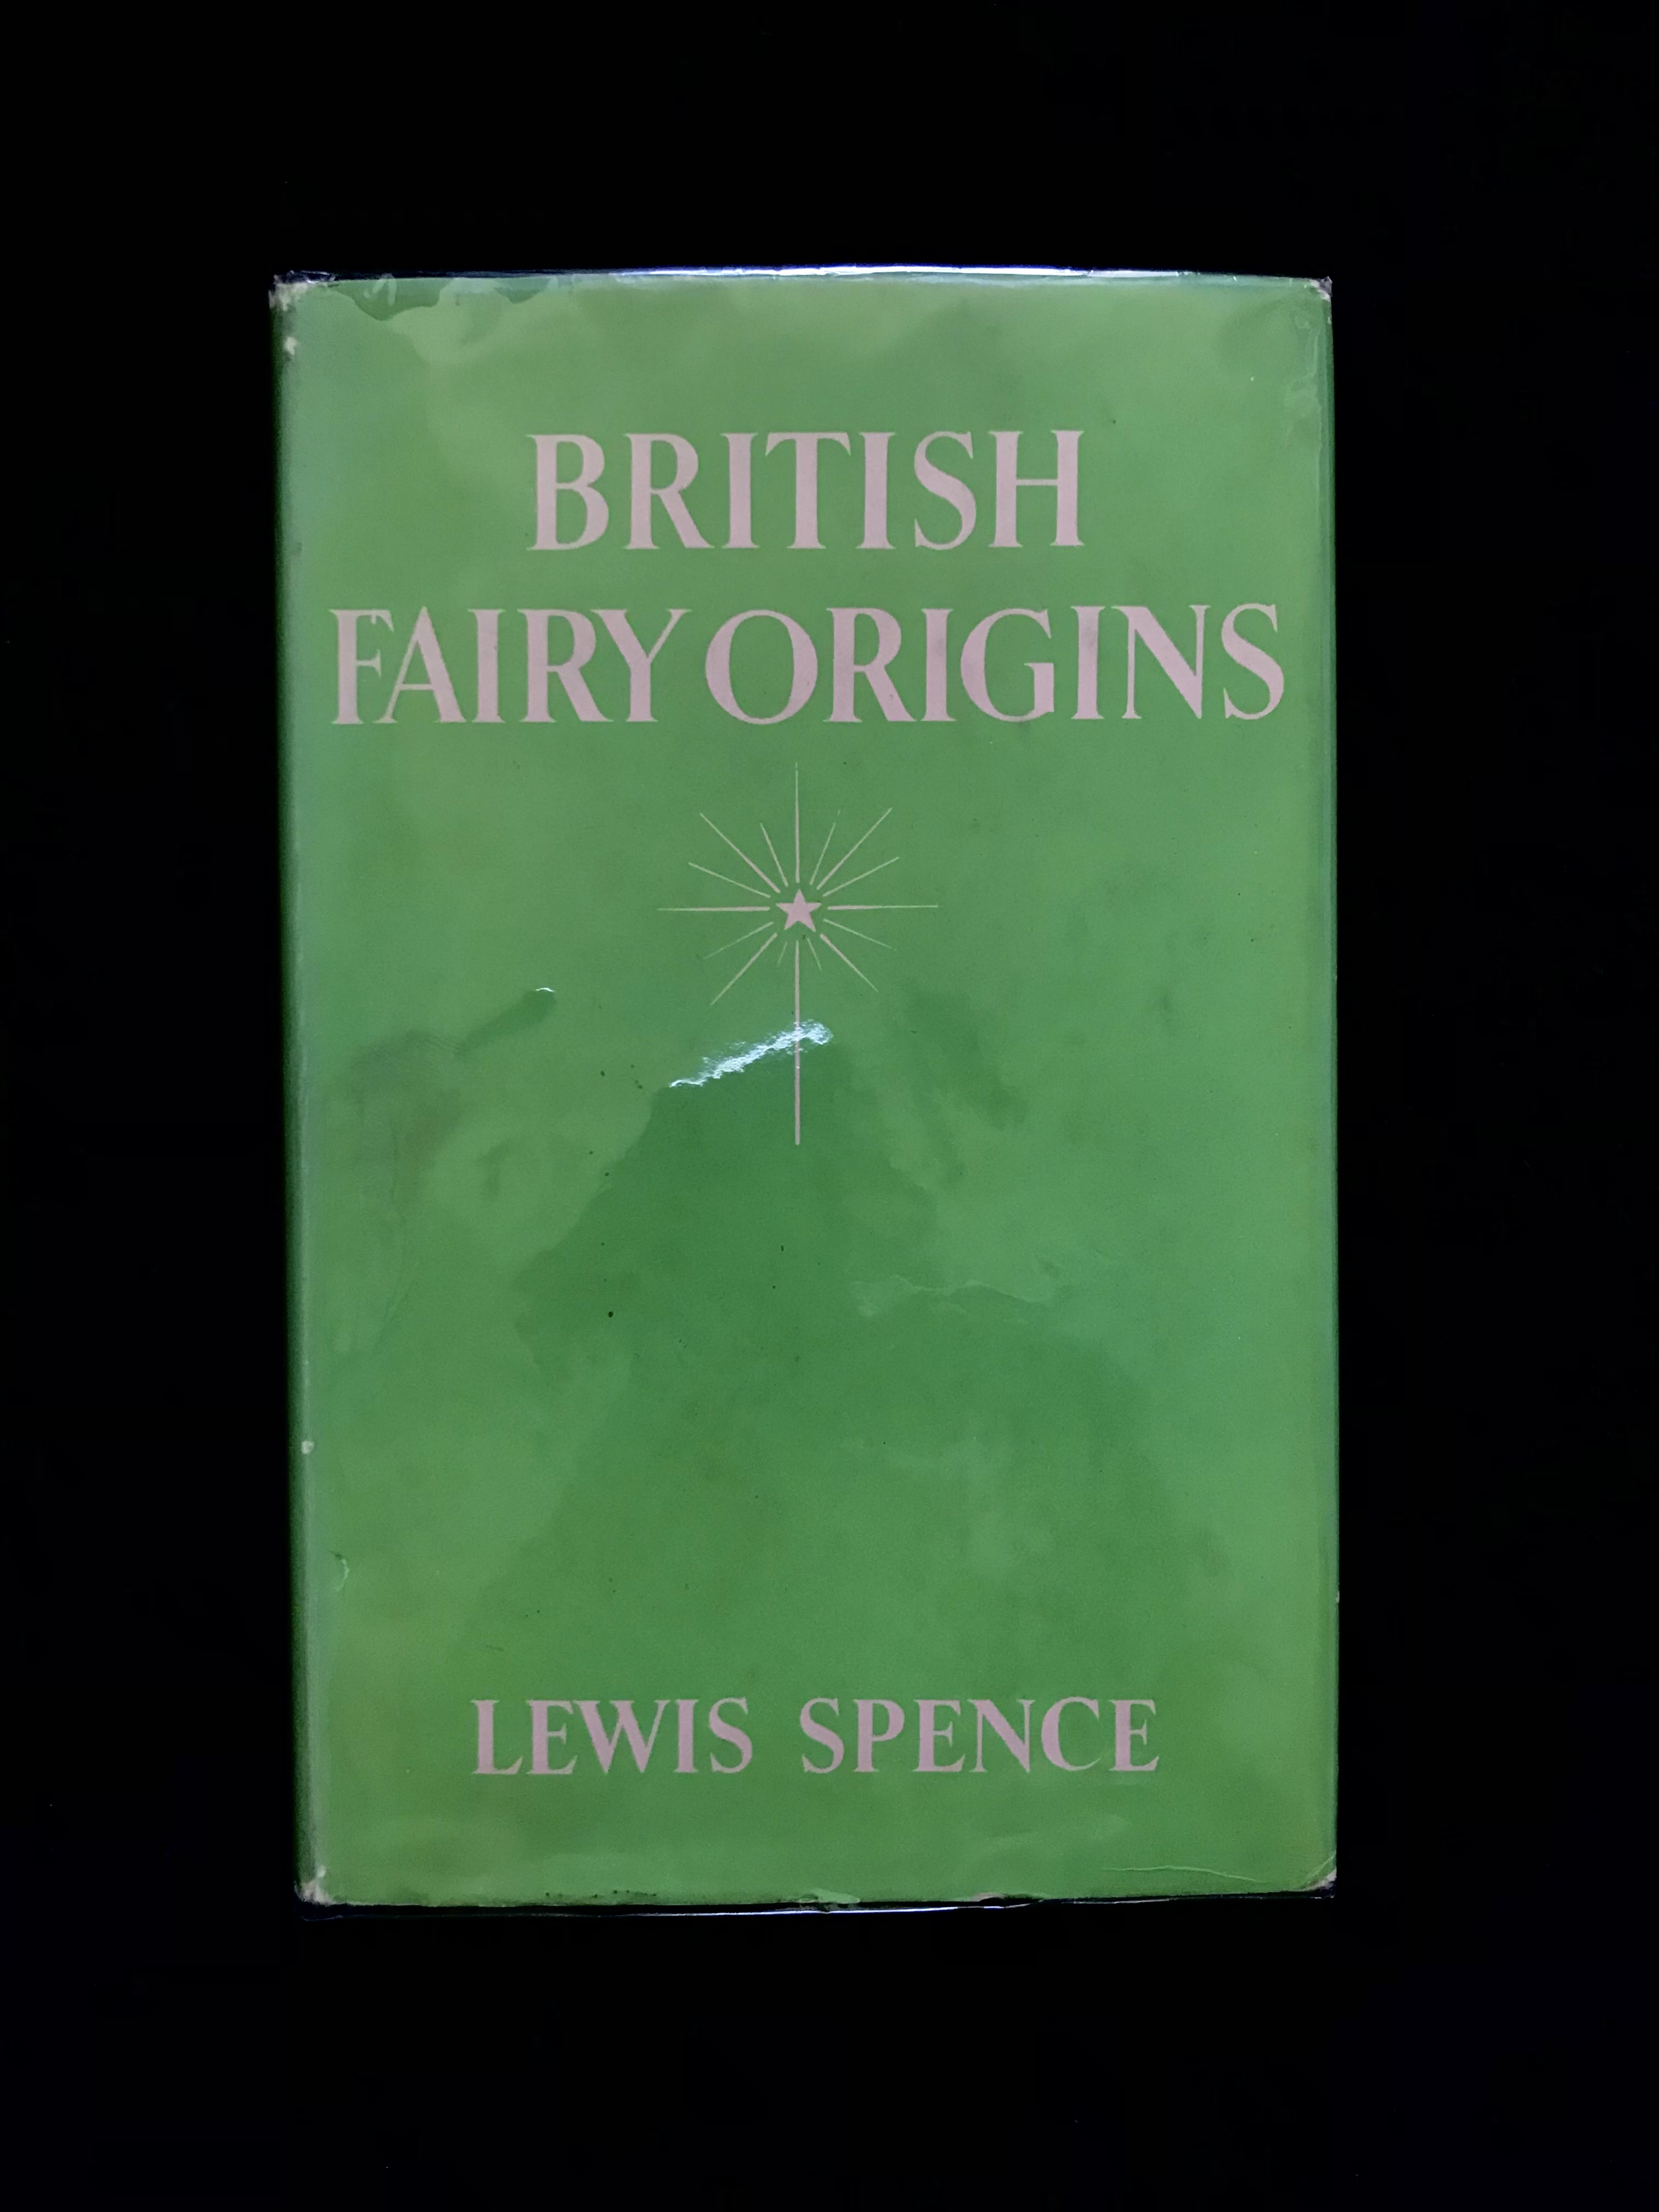 British Fairy Origins by Lewis Spence